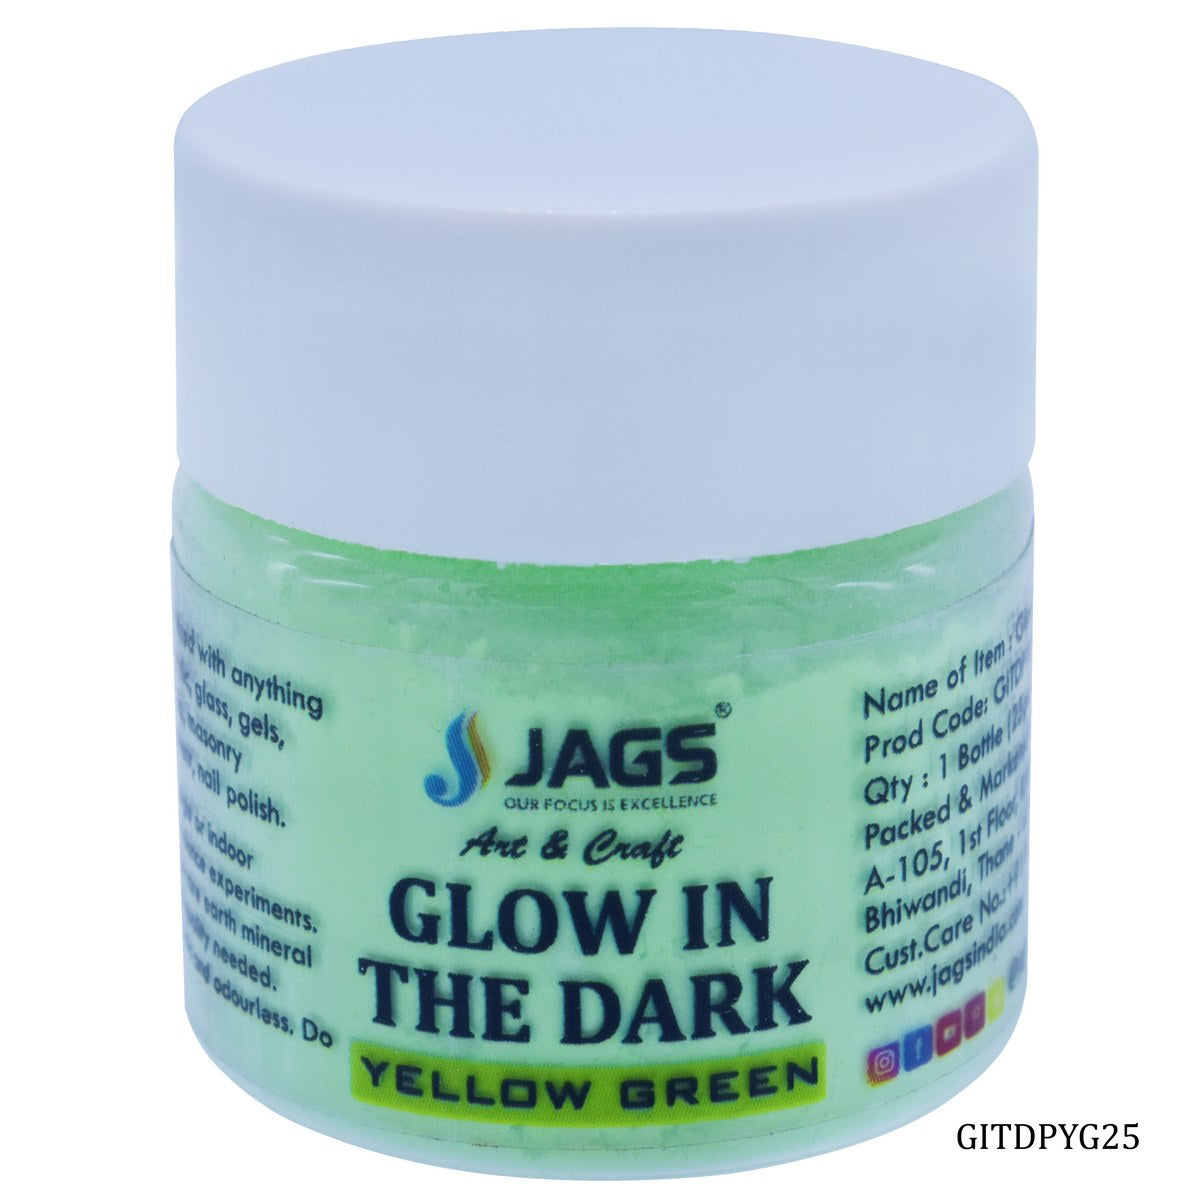 jags-mumbai Glow Powder & Pigment Glow in the Dark Powder 25gm Yellow Green GITDPYG25